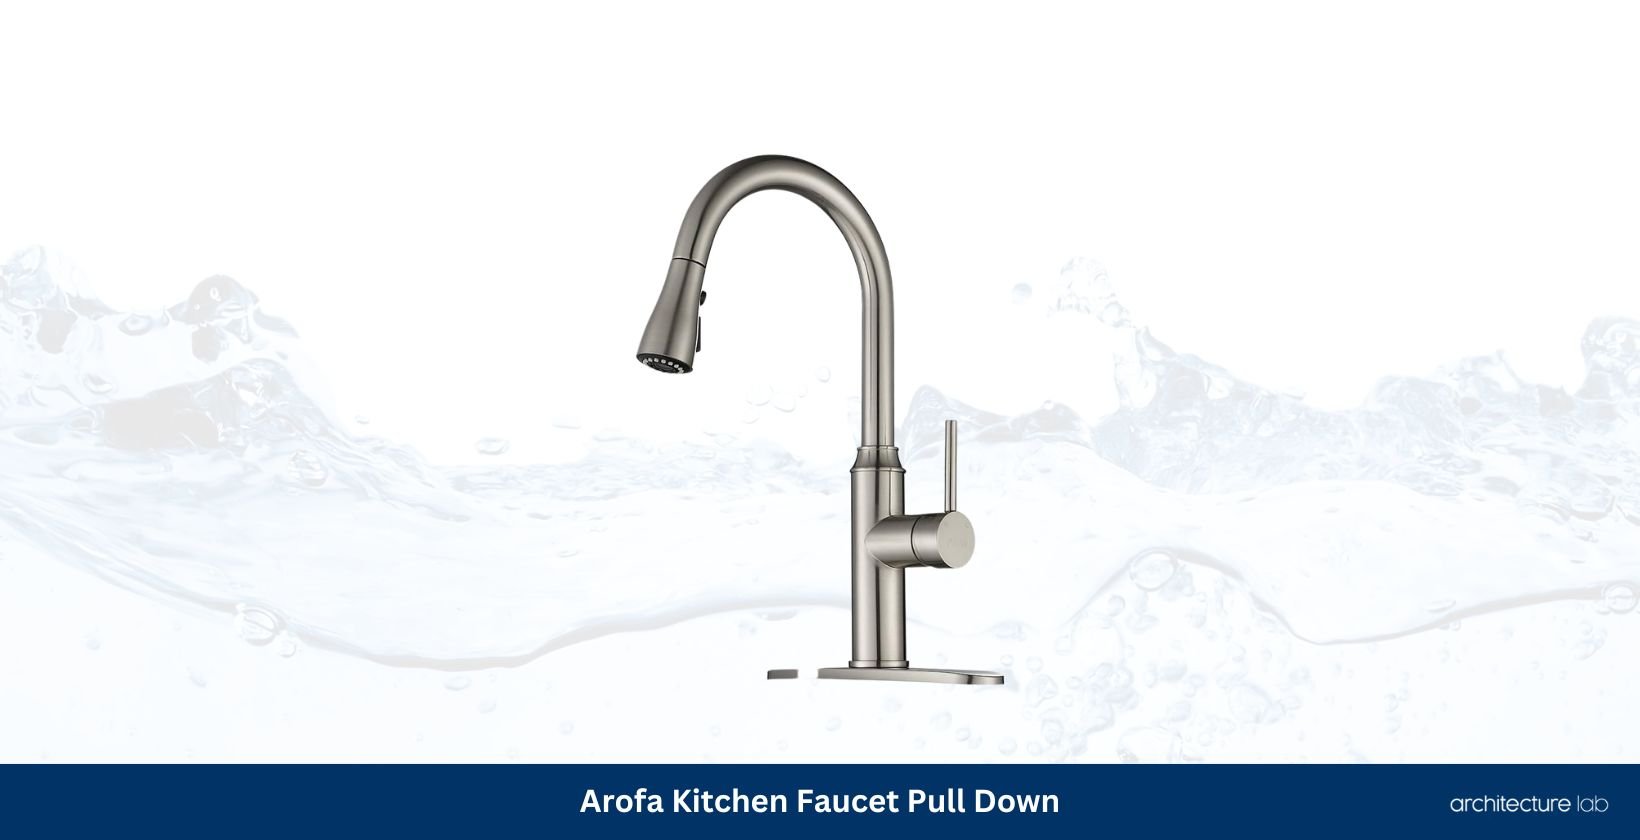 Arofa kitchen faucet